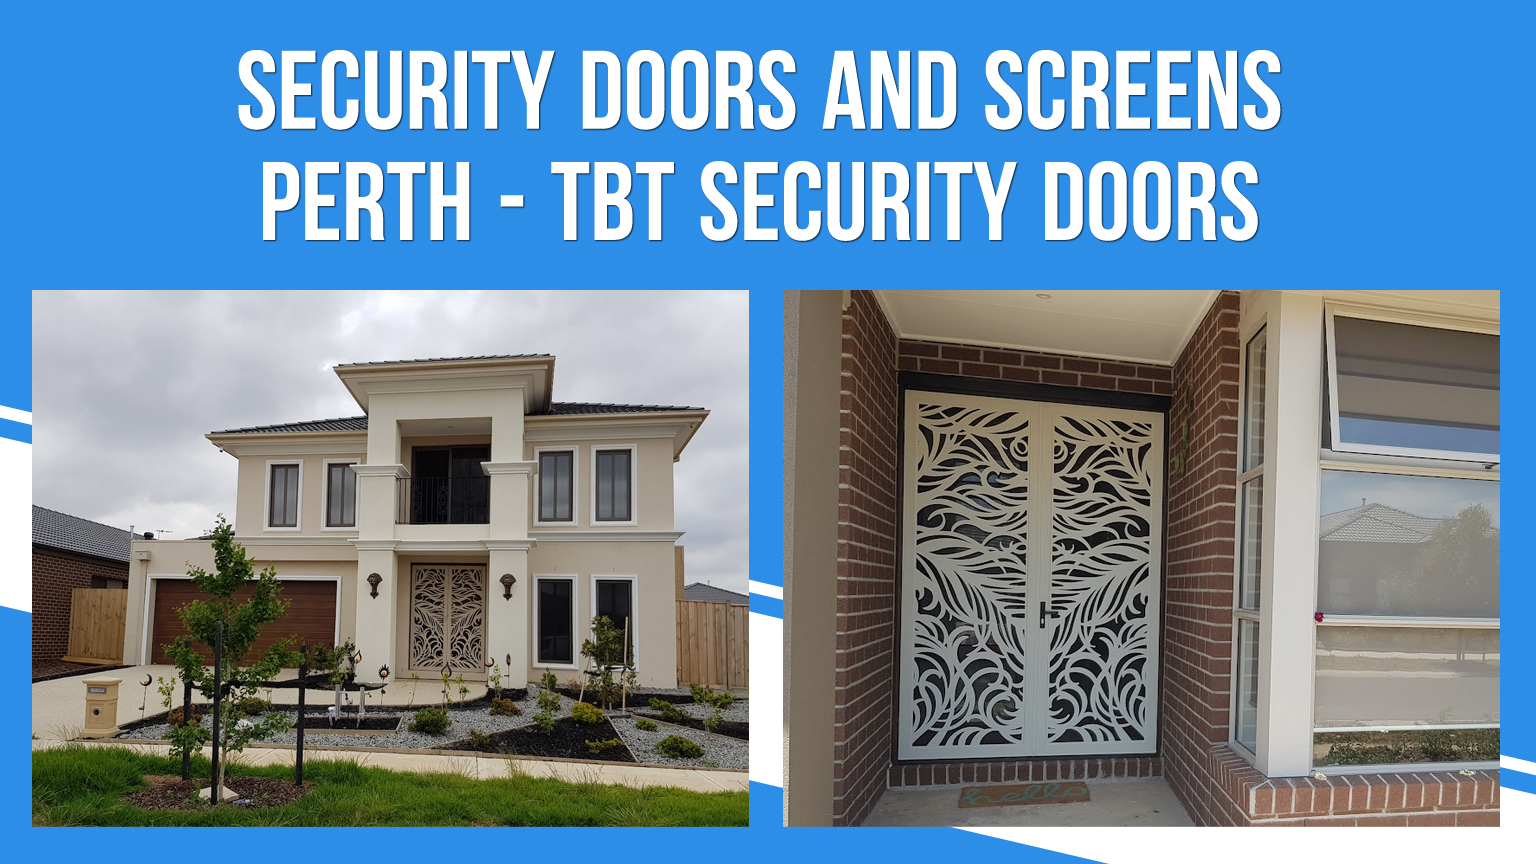 TBT Security Doors